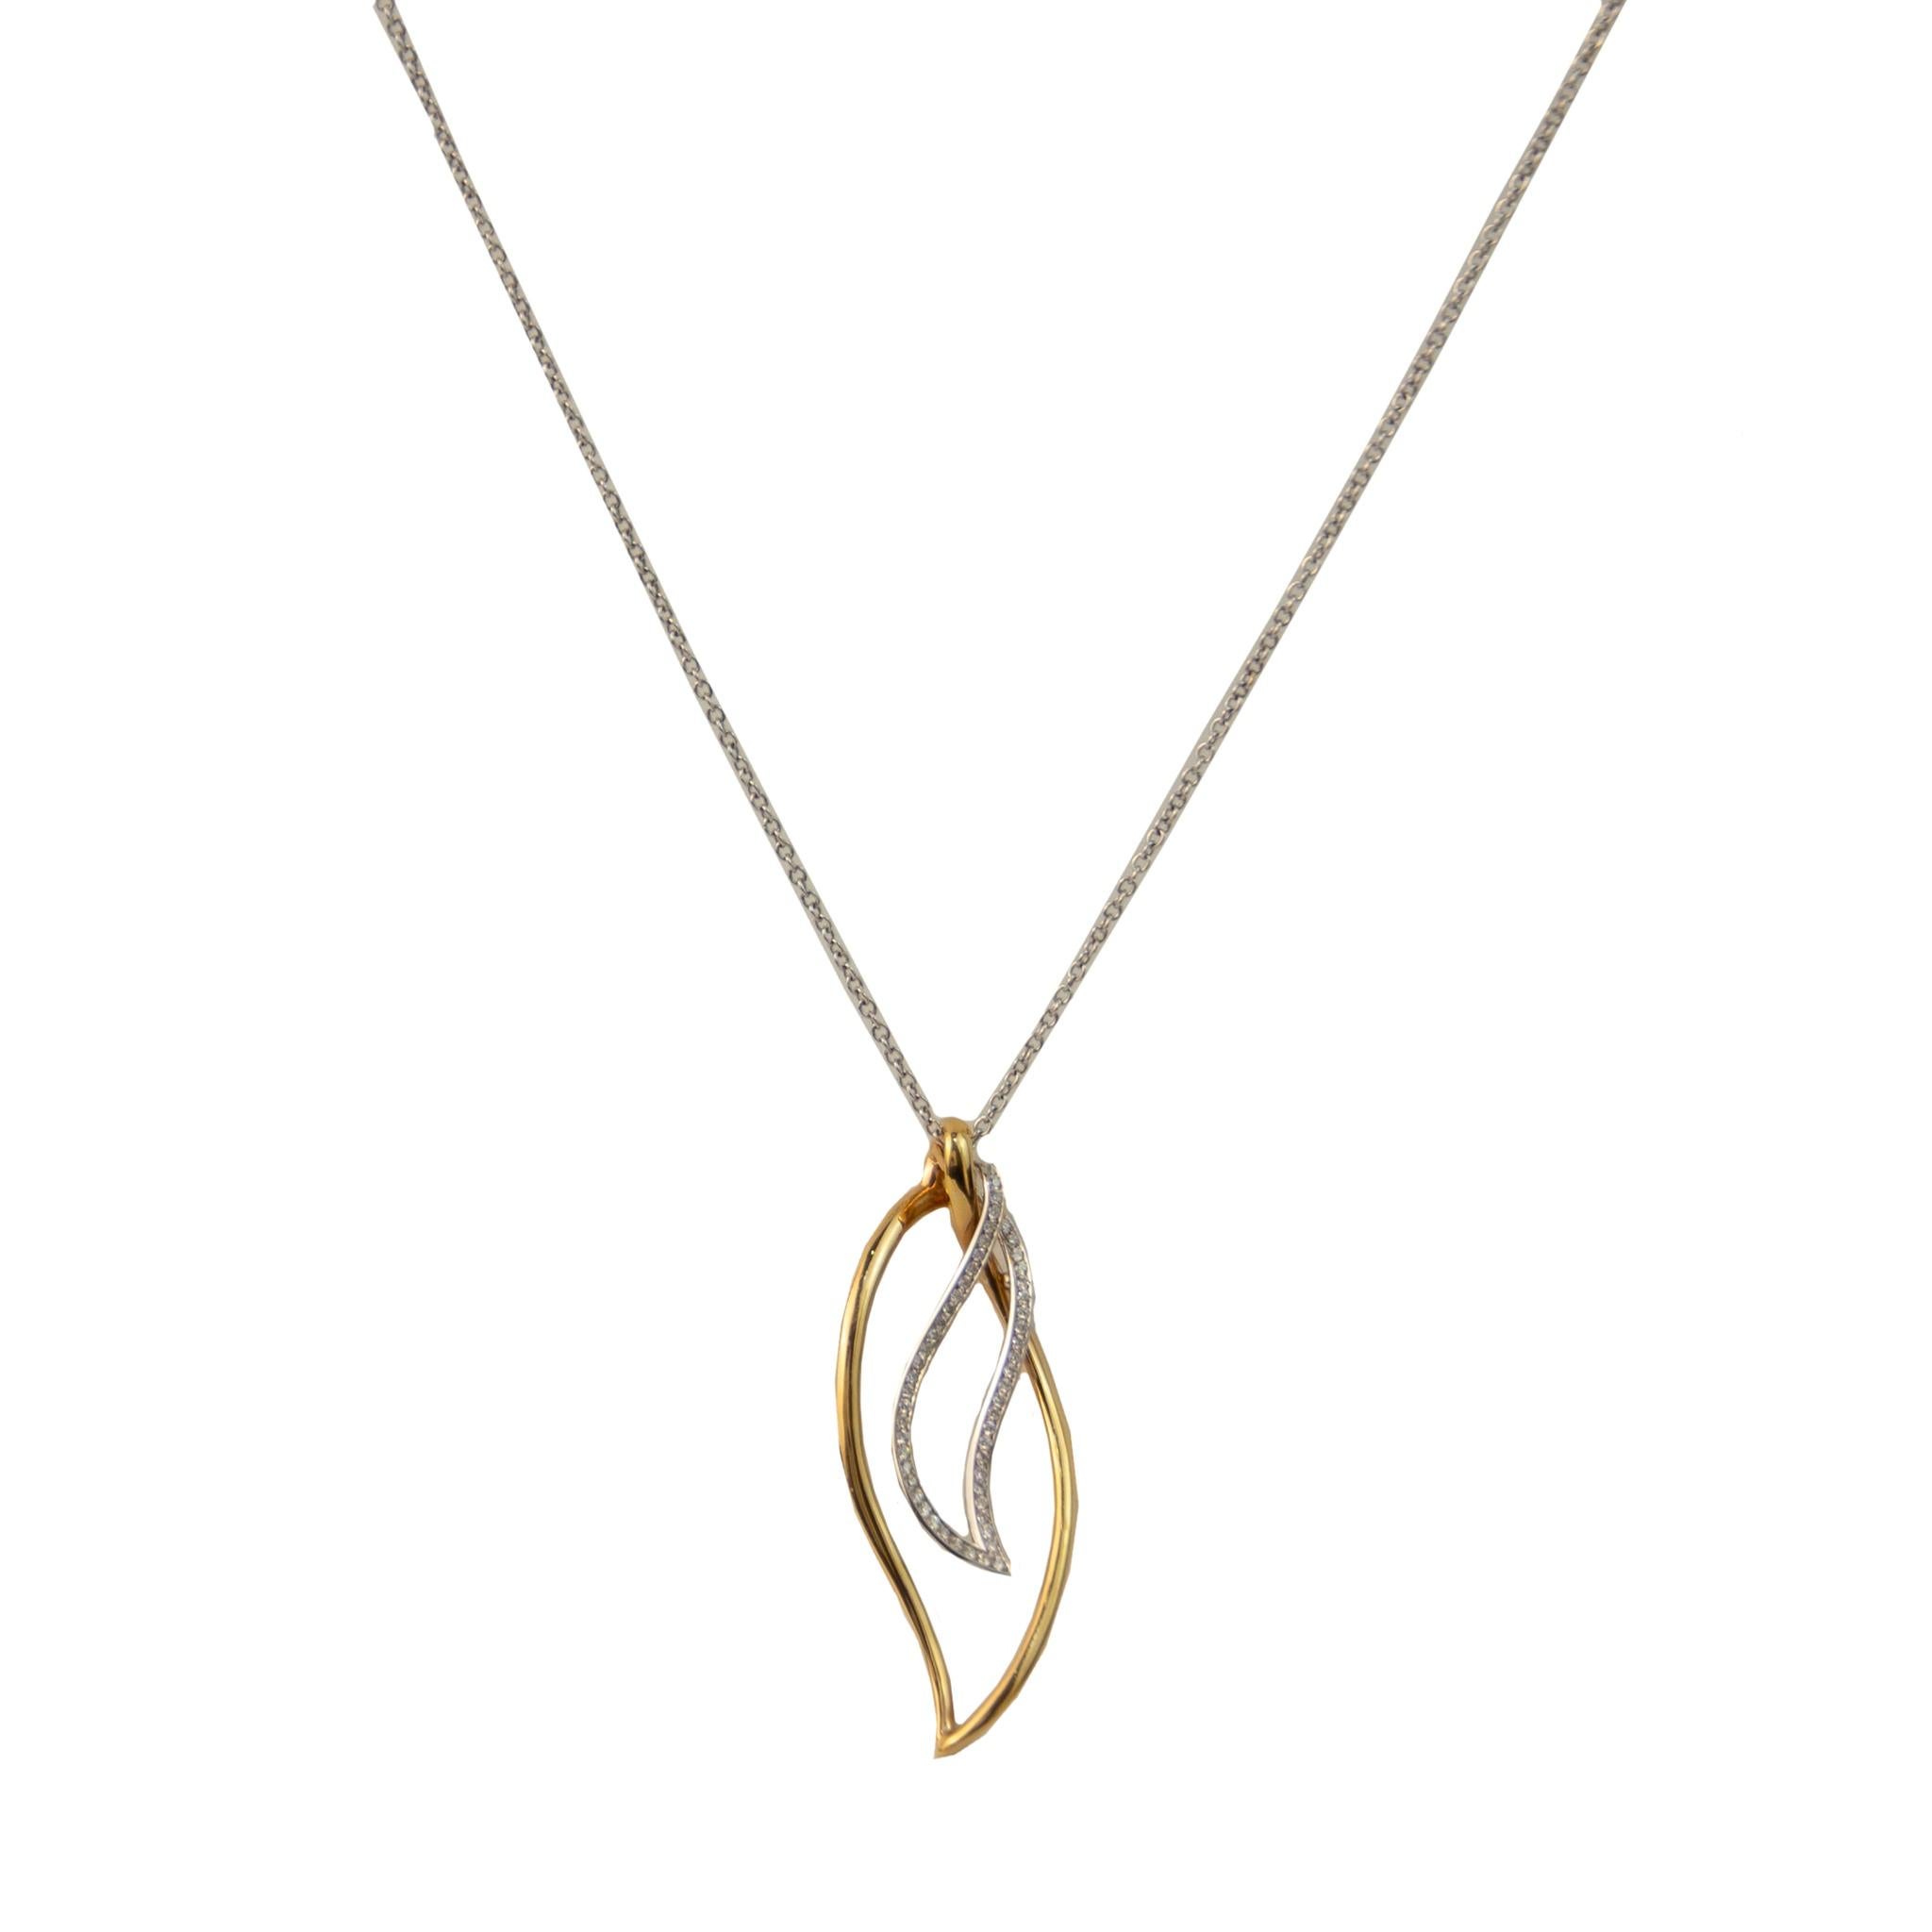 Luca Carati Leaf Pendant Necklace
18K White & Rose Gold
Diamond: 0.50ctw
SKU: LC01022
Retail price: $4,950.00